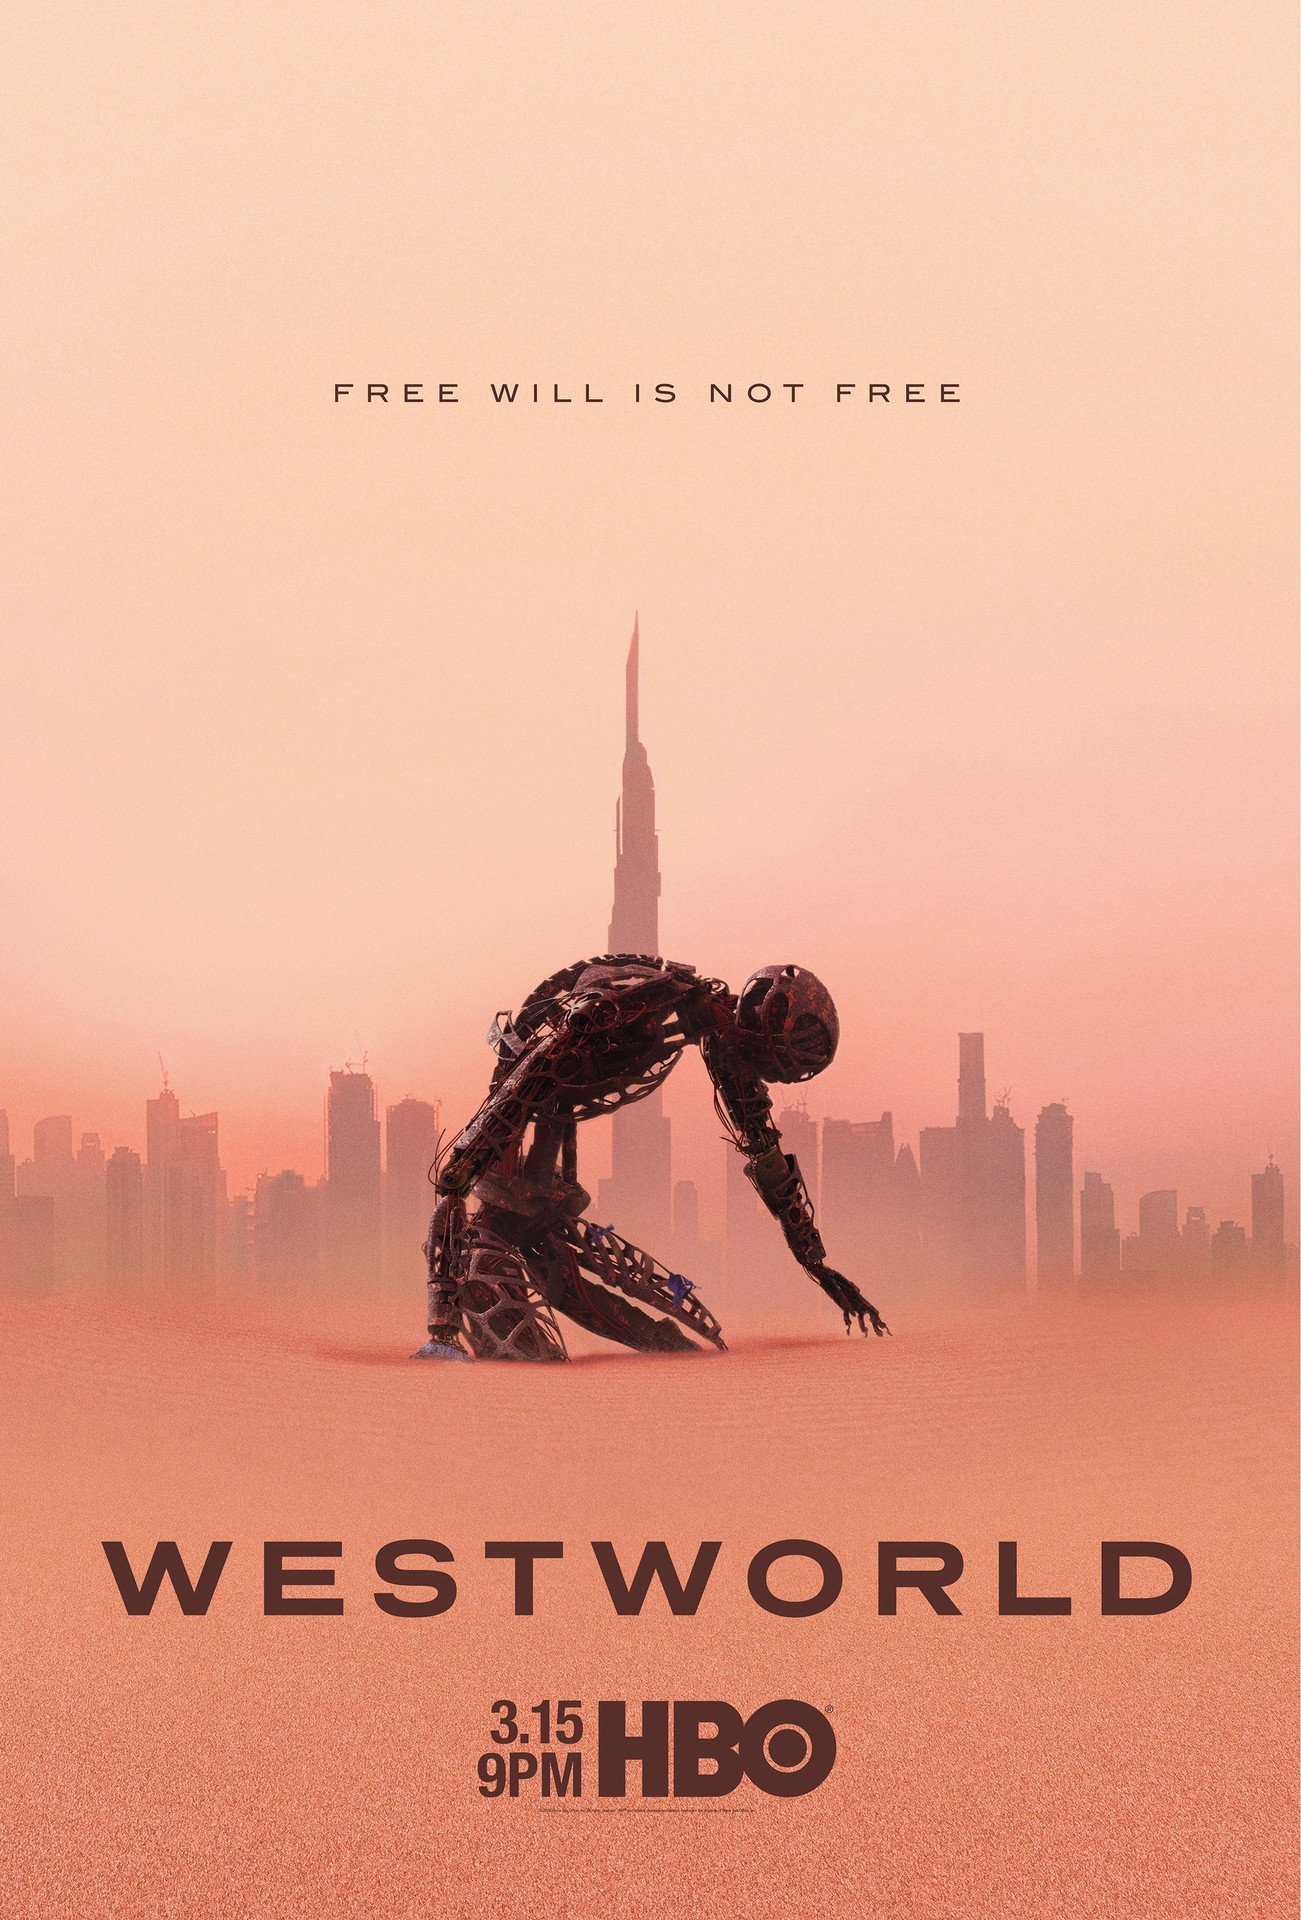 westworld-gets-renewed-for-season-4-at-hbo-thenationroar